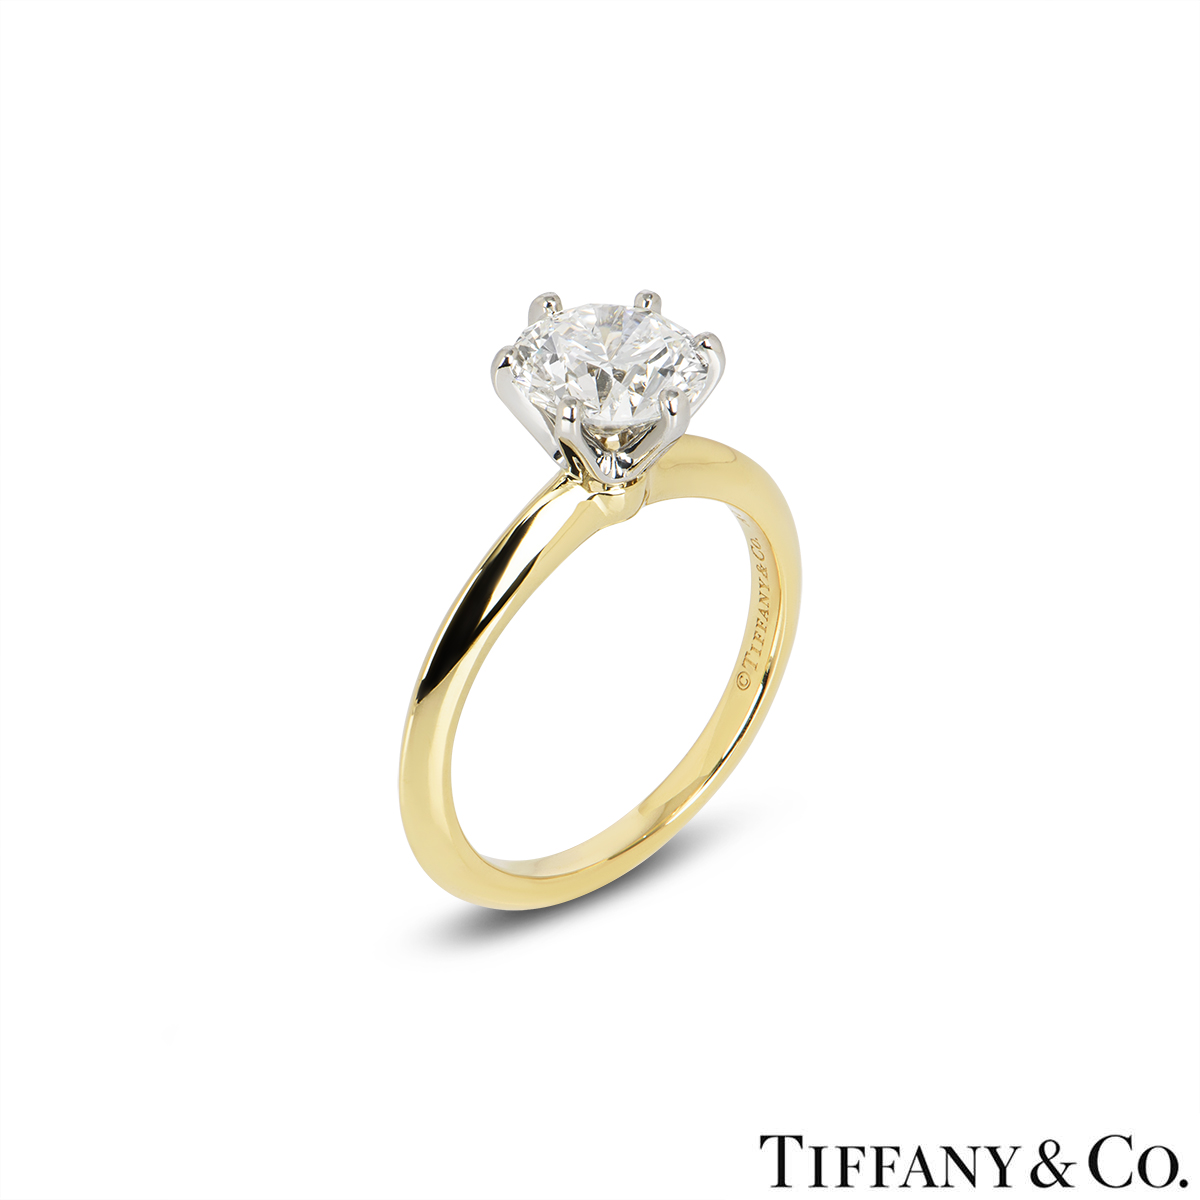 Tiffany & Co. Yellow Gold Diamond Setting Ring 1.67ct G/VVS1 XXX